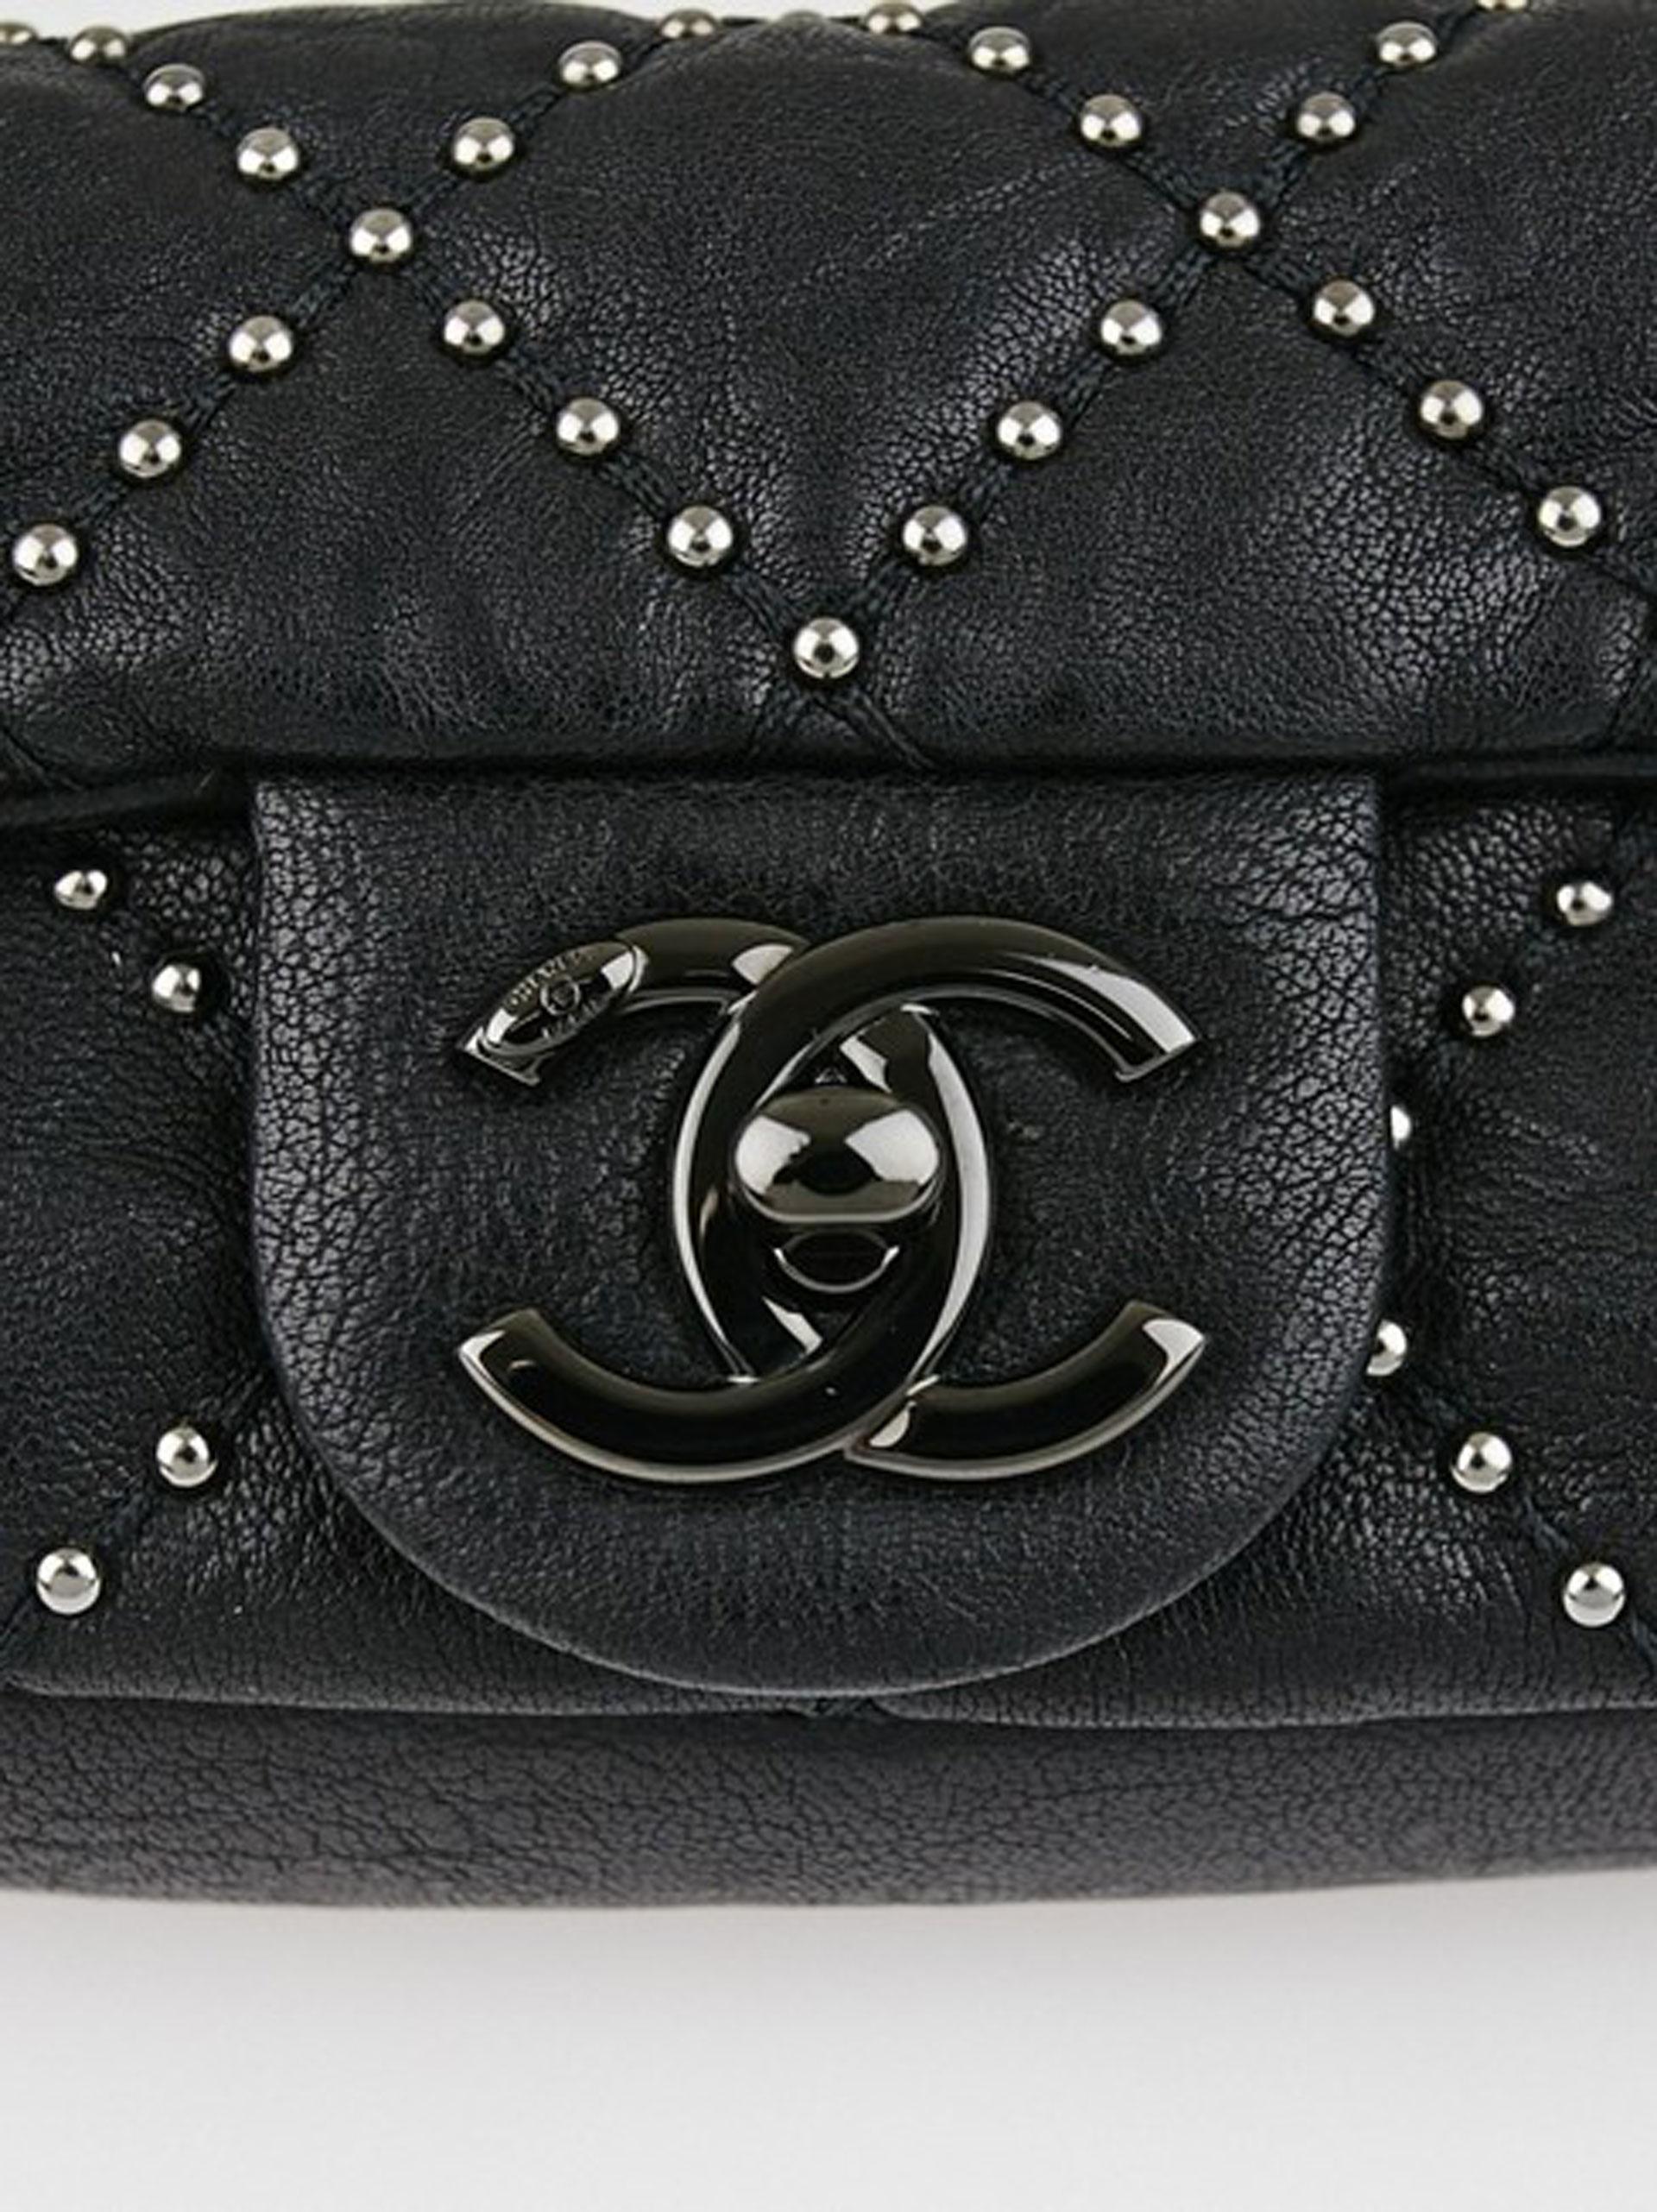 Chanel Classic Flap So Studded Mini Dallas Black Leather Cross Body Bag In Good Condition For Sale In Miami, FL